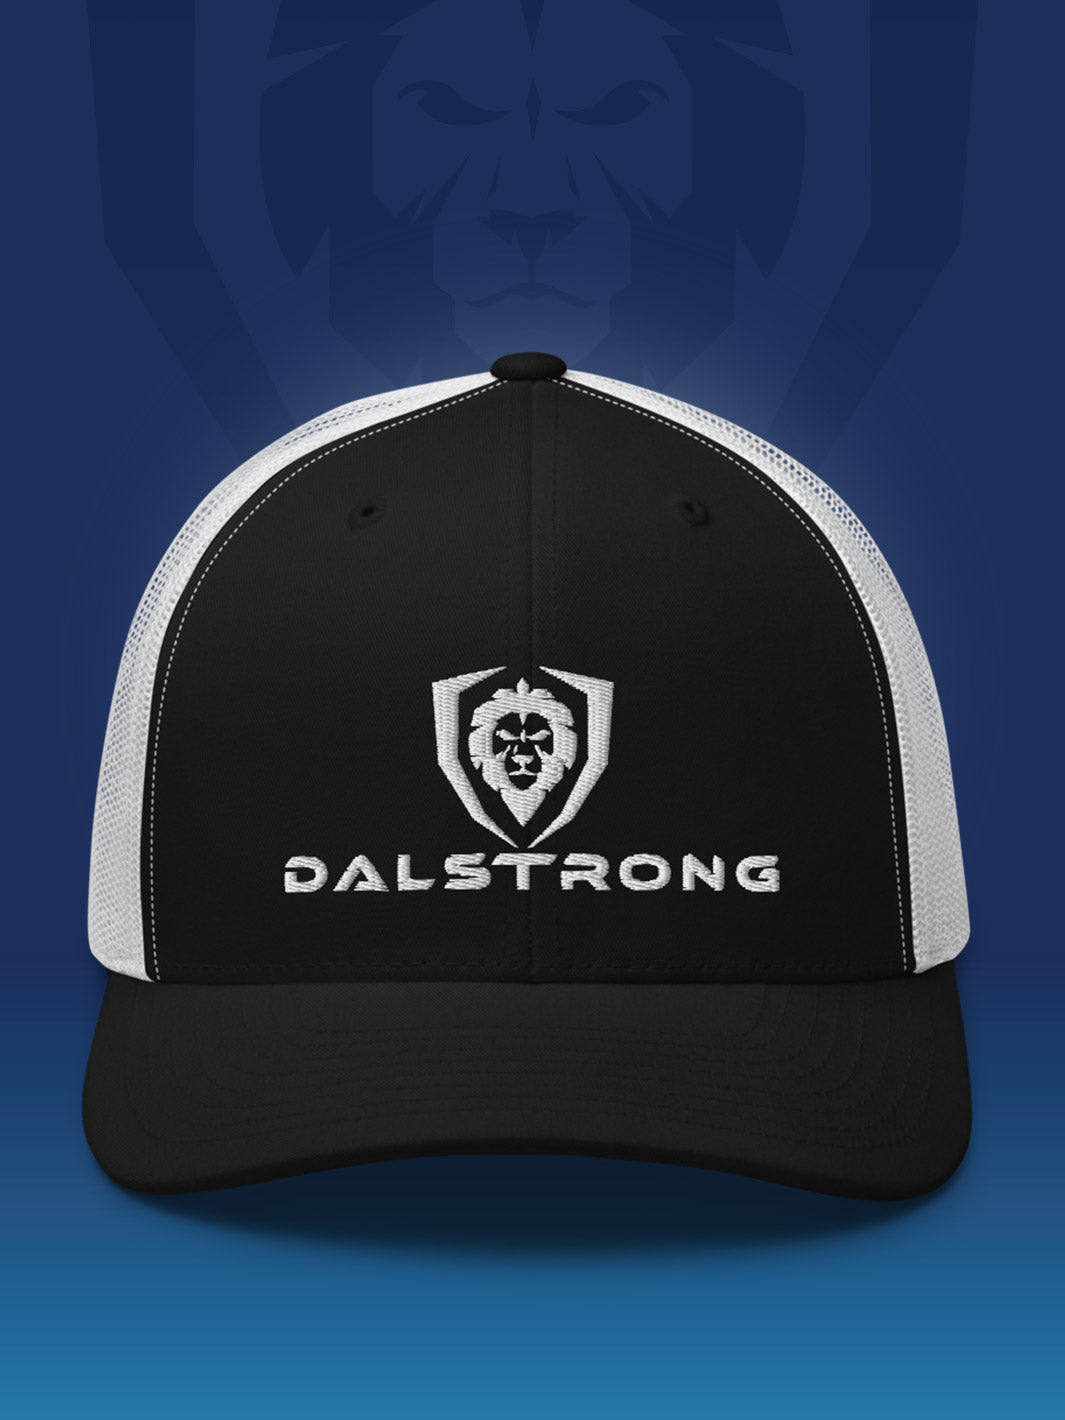 Dalstrong apparel trucker cap - classic logo.